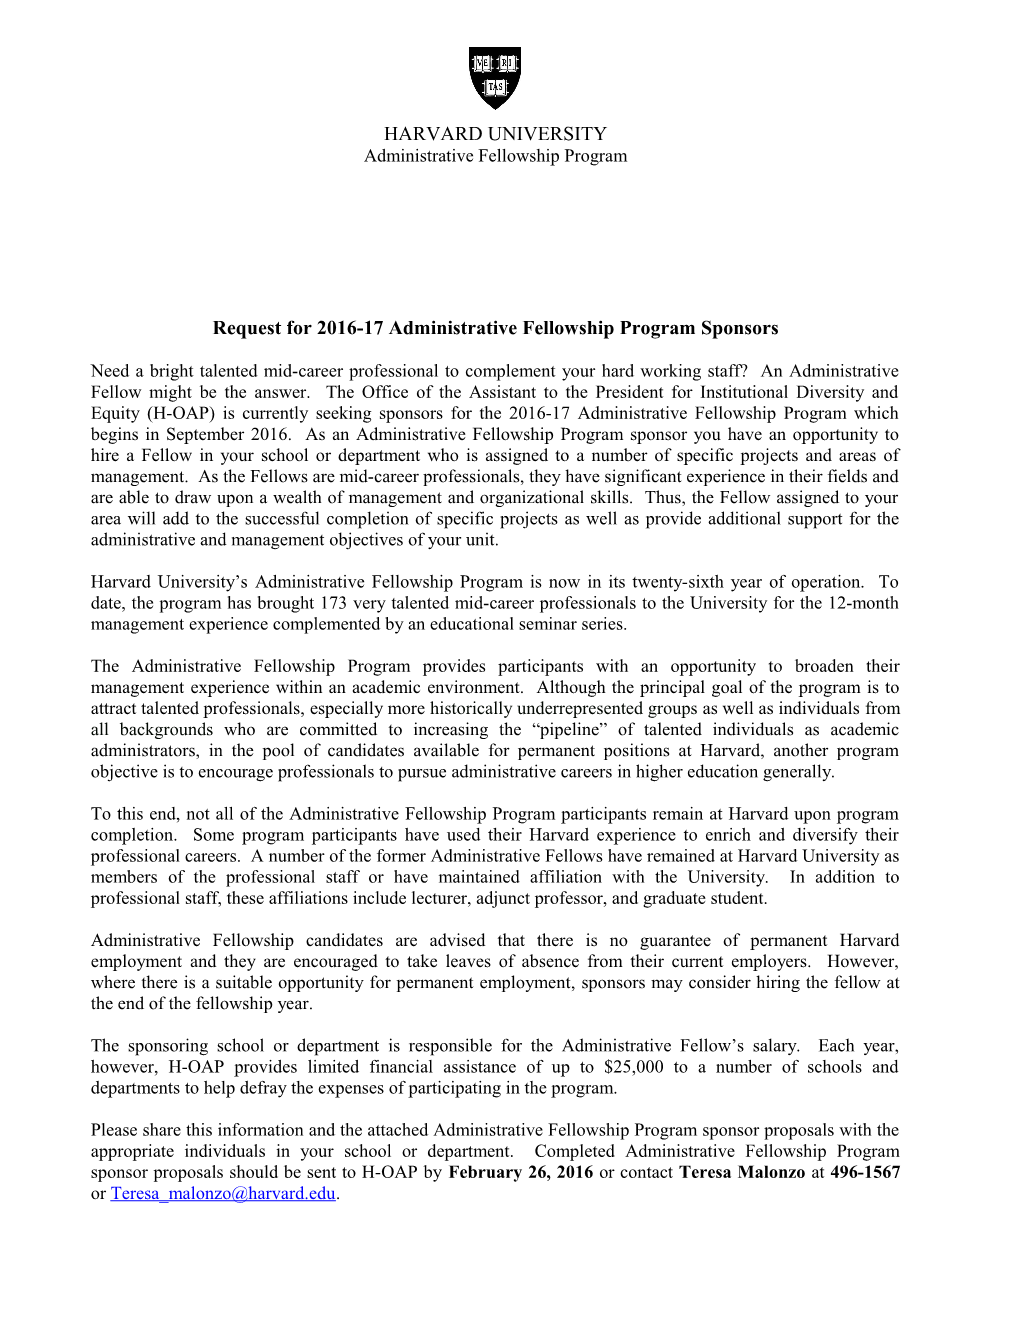 Request for 2016-17 Administrative Fellowship Program Sponsors